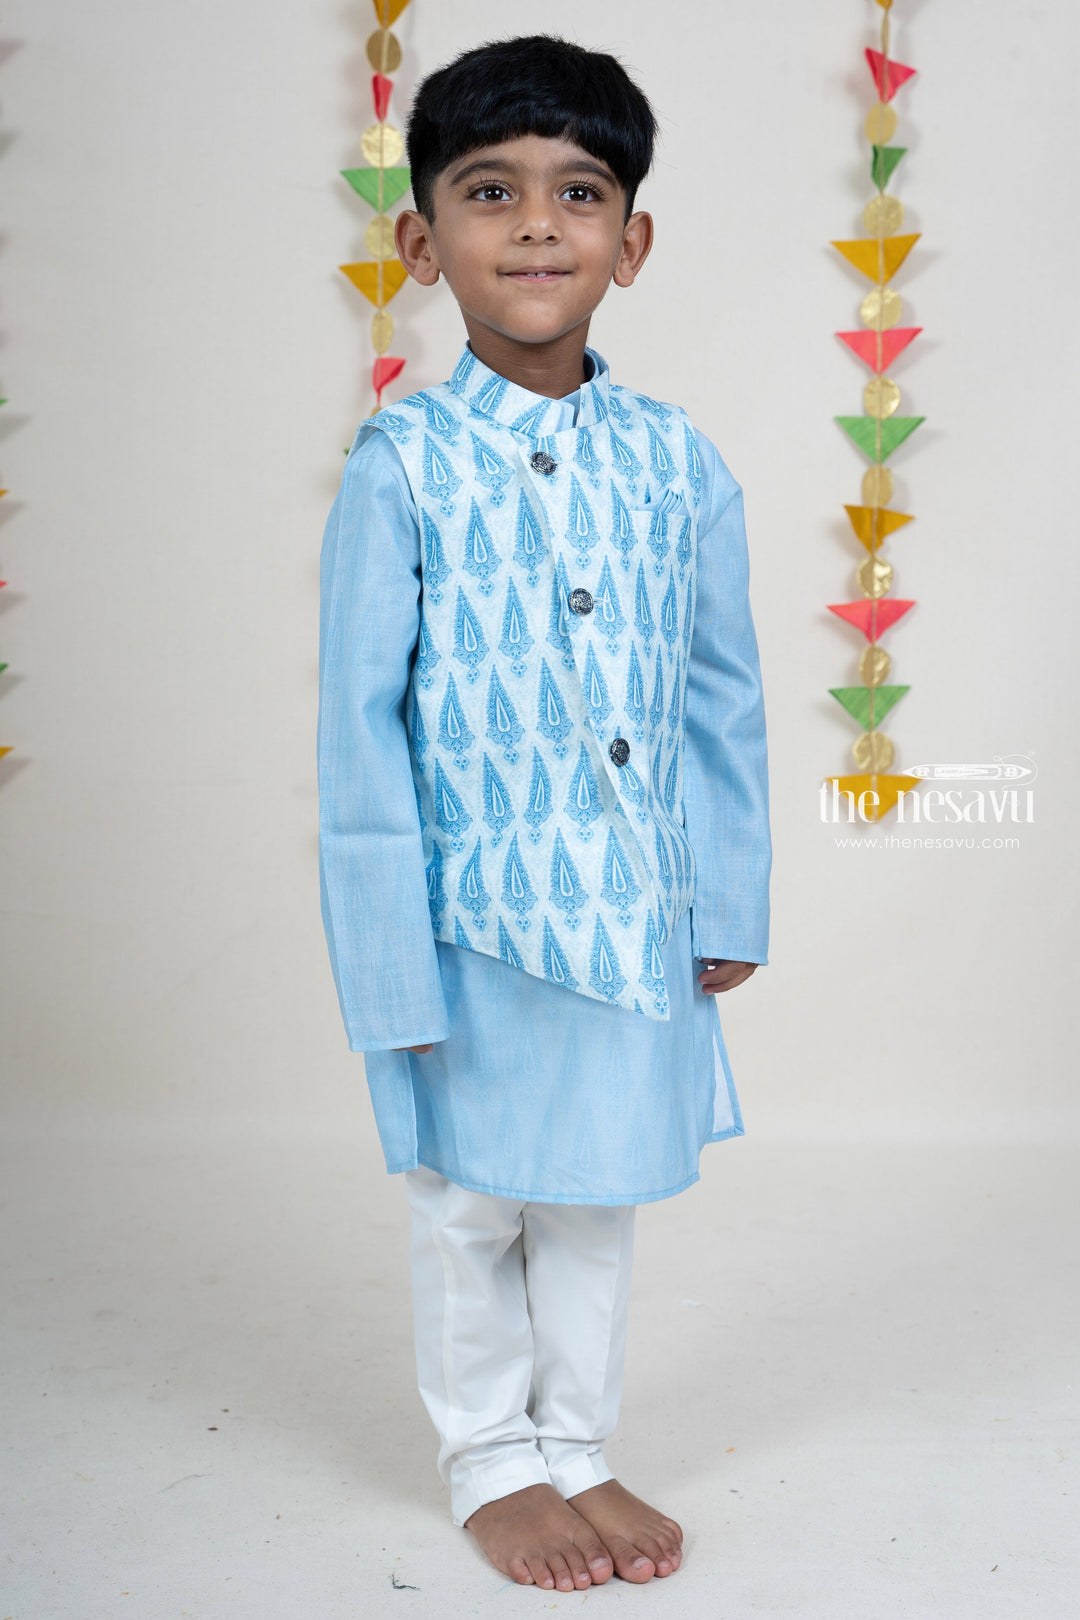 The Nesavu Ethnic Sets Light Blue Designer Overcoat Kurta Dresses For Baby Boys psr silks Nesavu 16 (1Y) / Blue BES221A